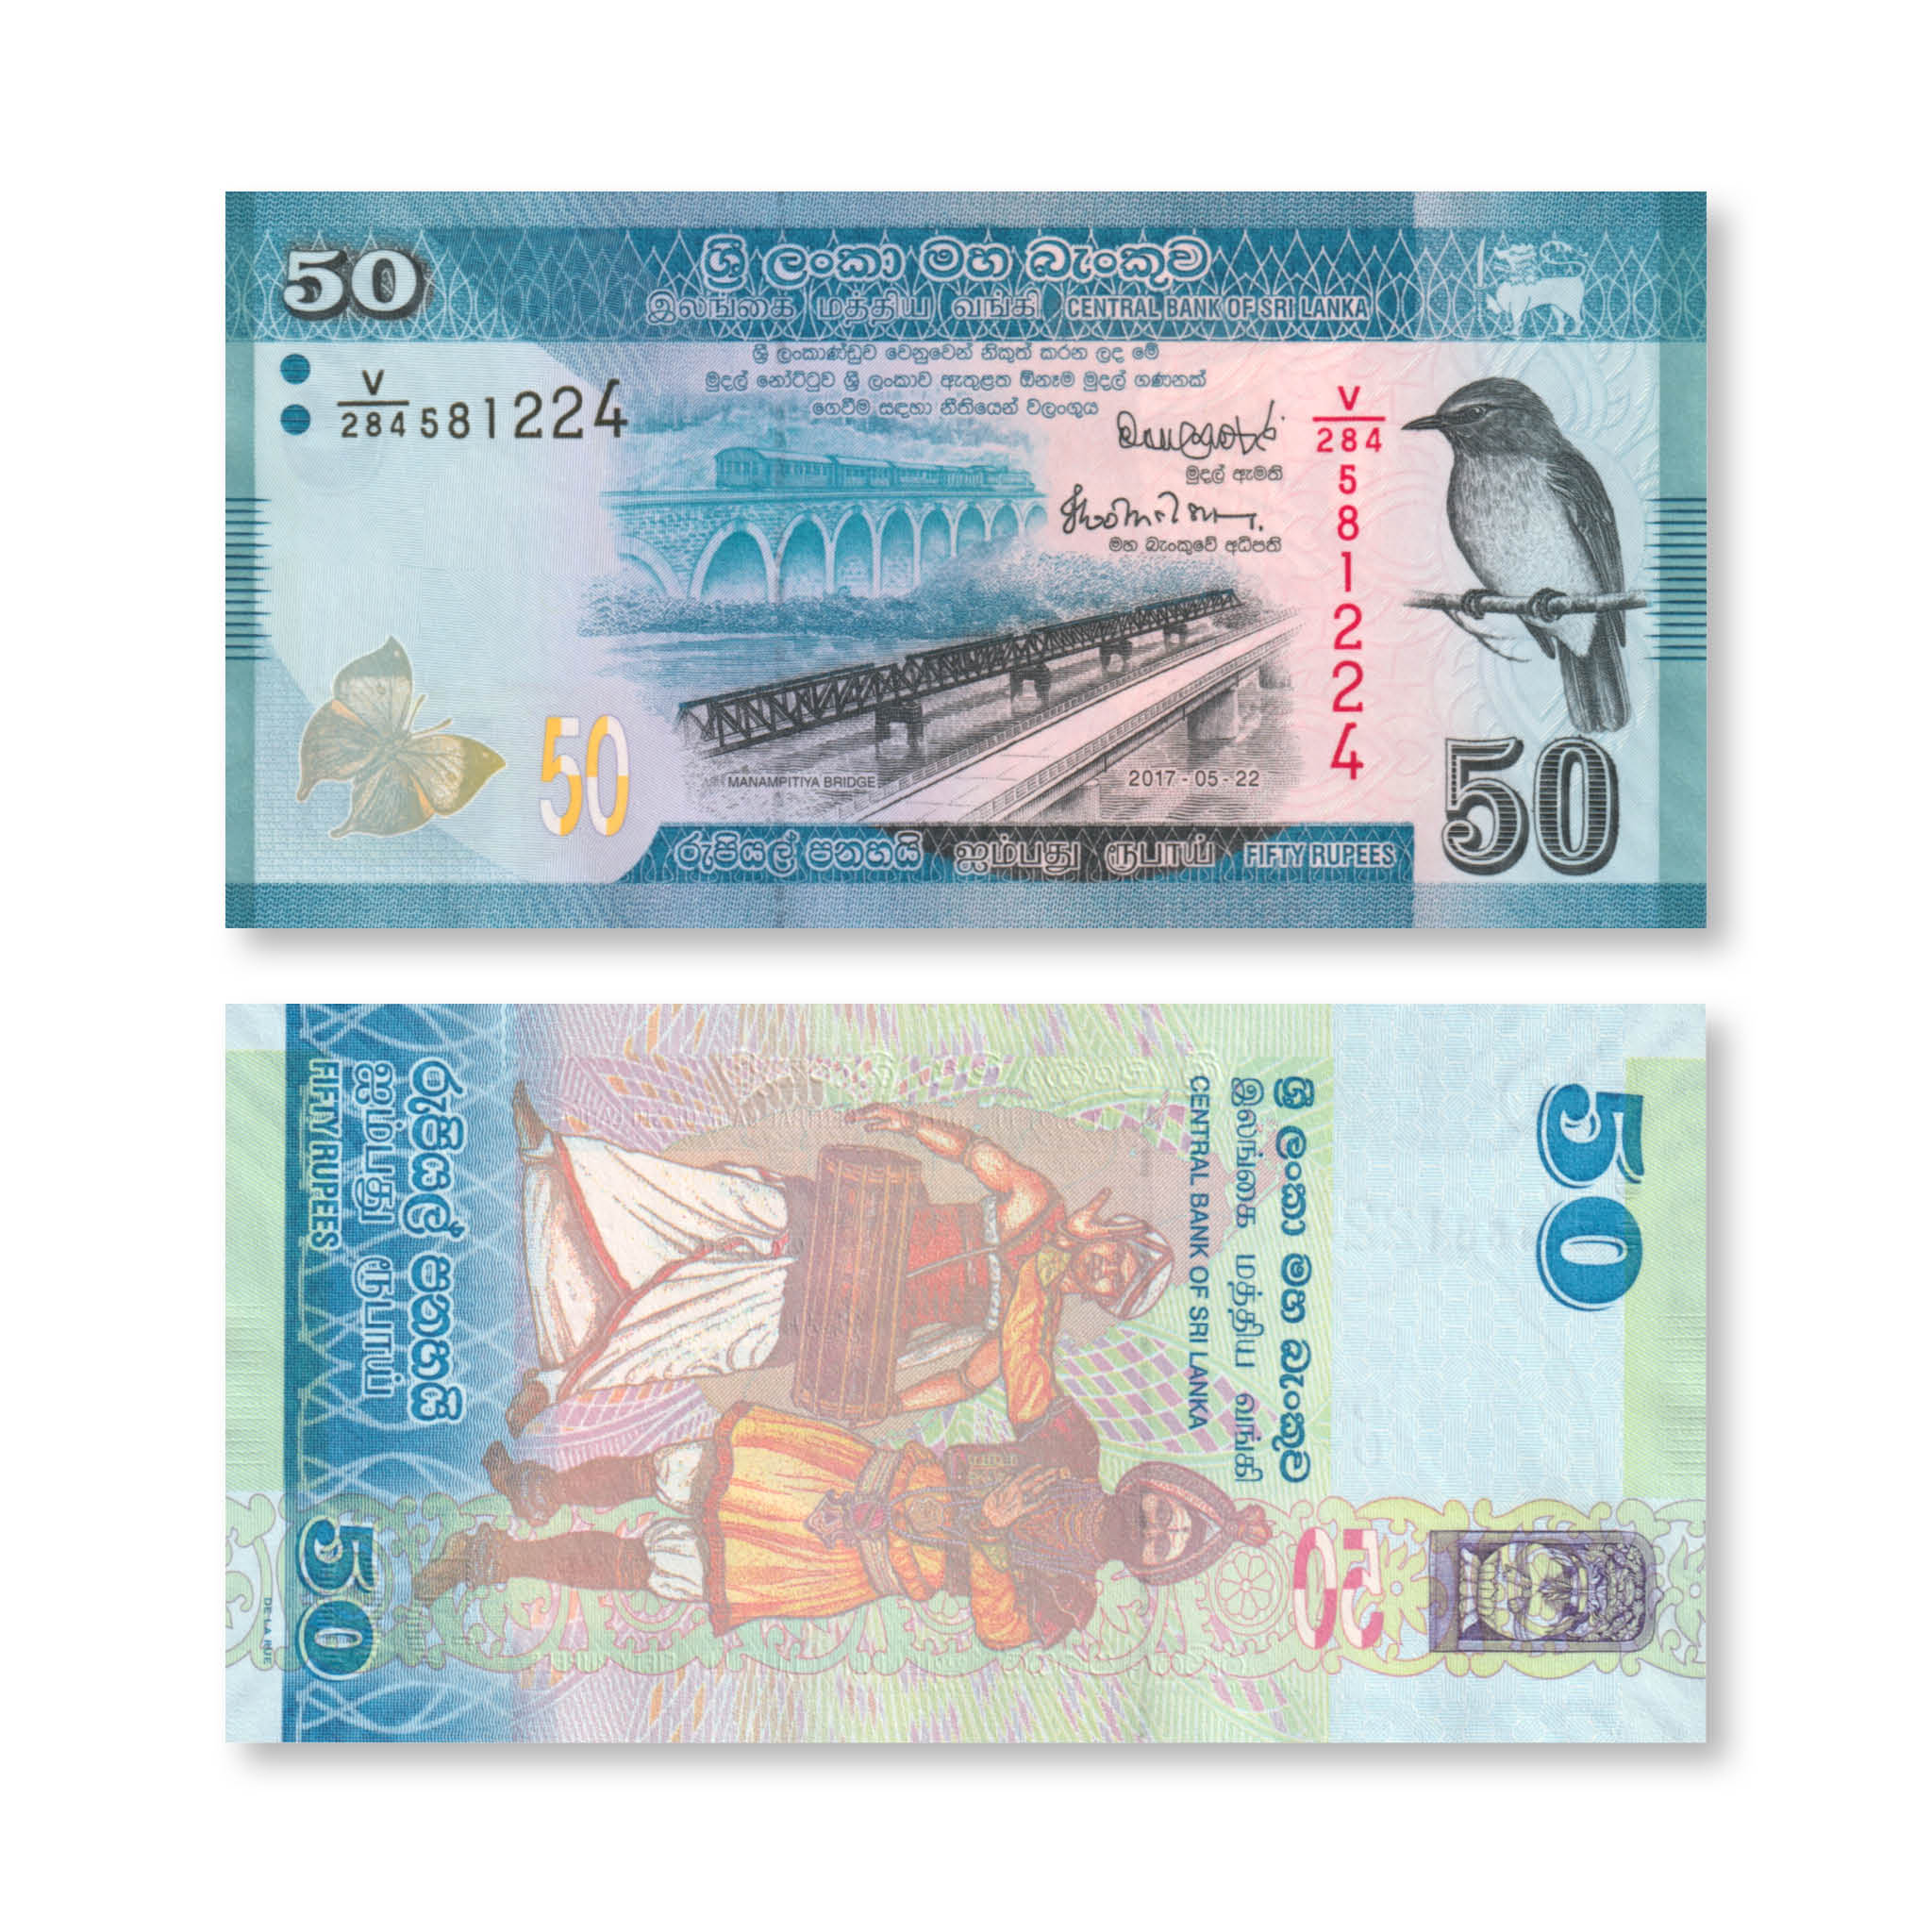 Sri Lanka 50 Rupees, 2016, B124c, P124d, UNC - Robert's World Money - World Banknotes